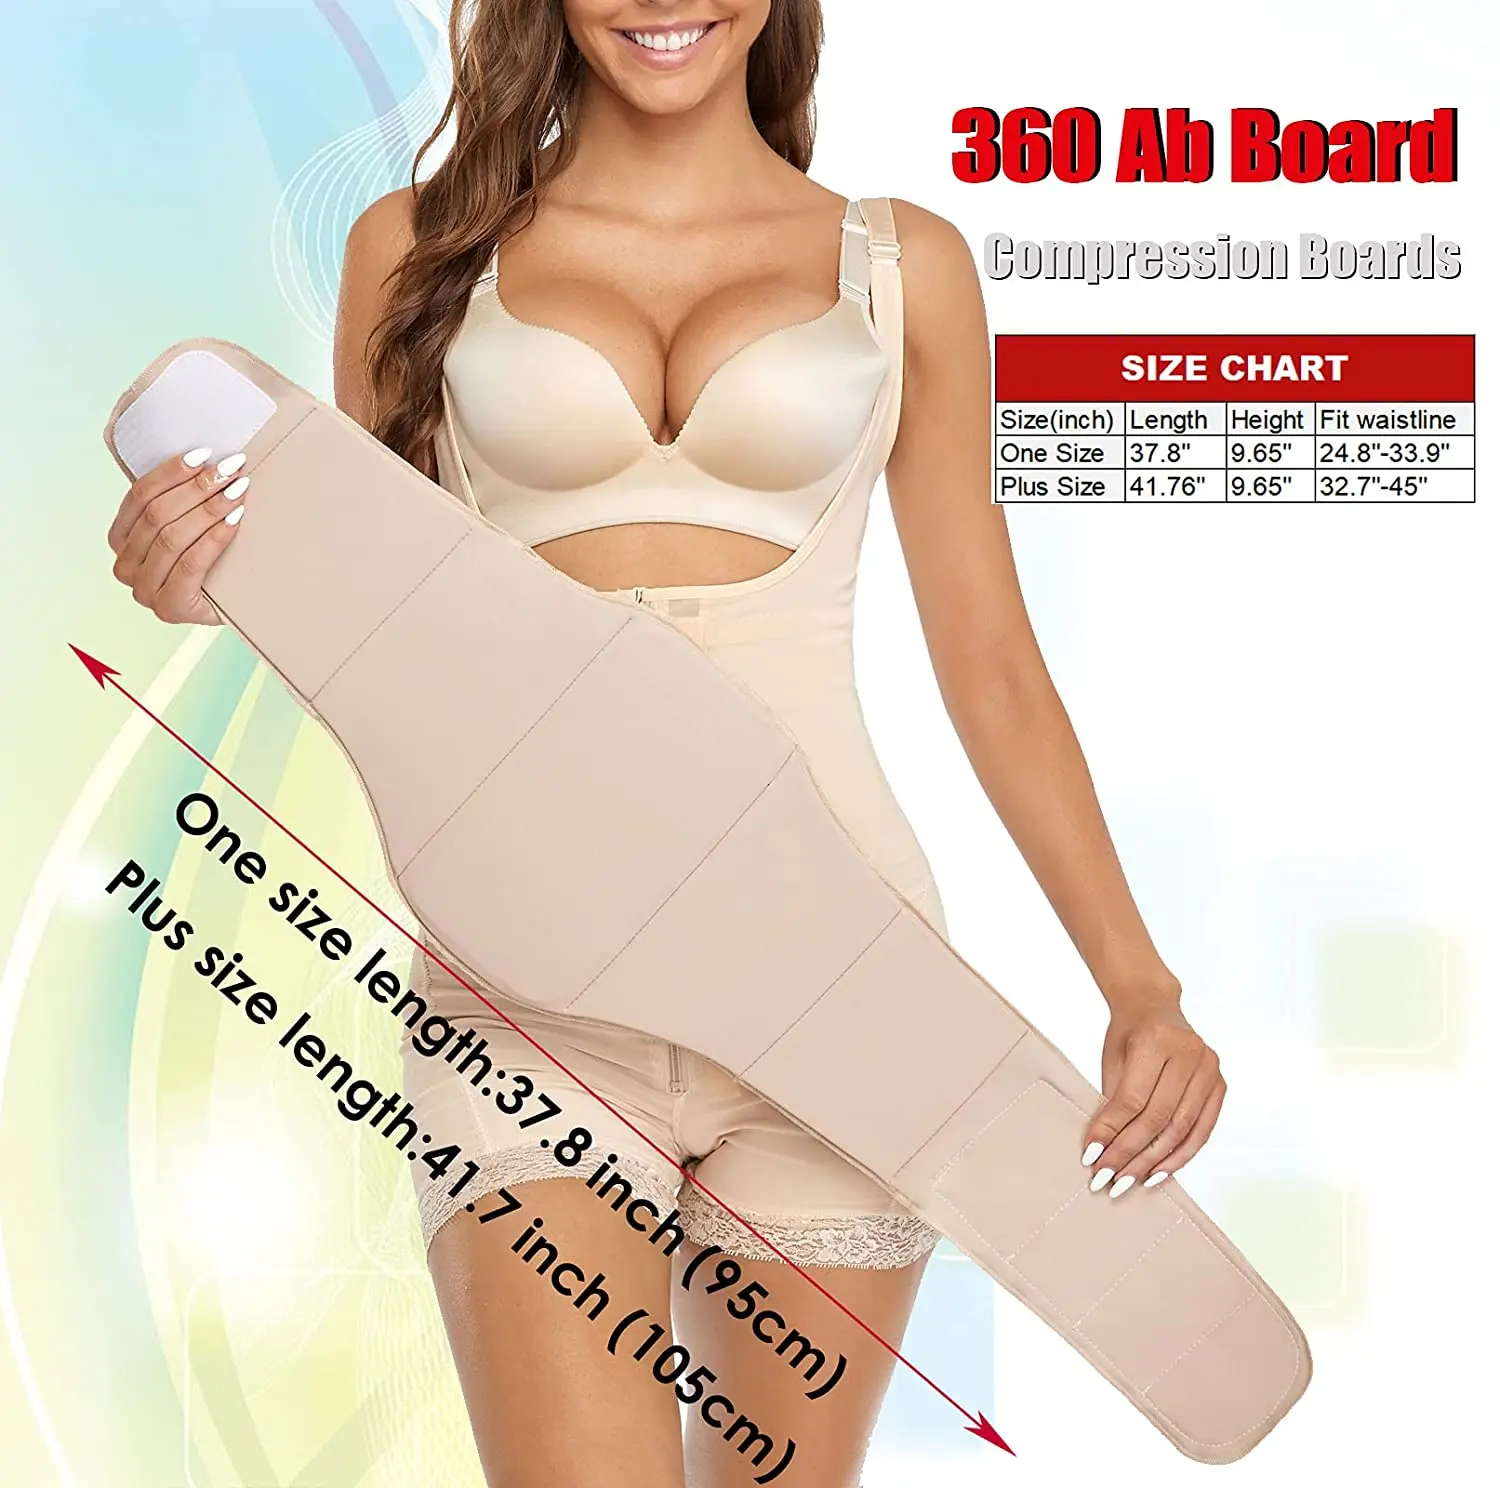 Tabla Abdominal 360 Ab Board Post Surgery Lipo Foam and Compression Boards  for Liposuction, Black one size